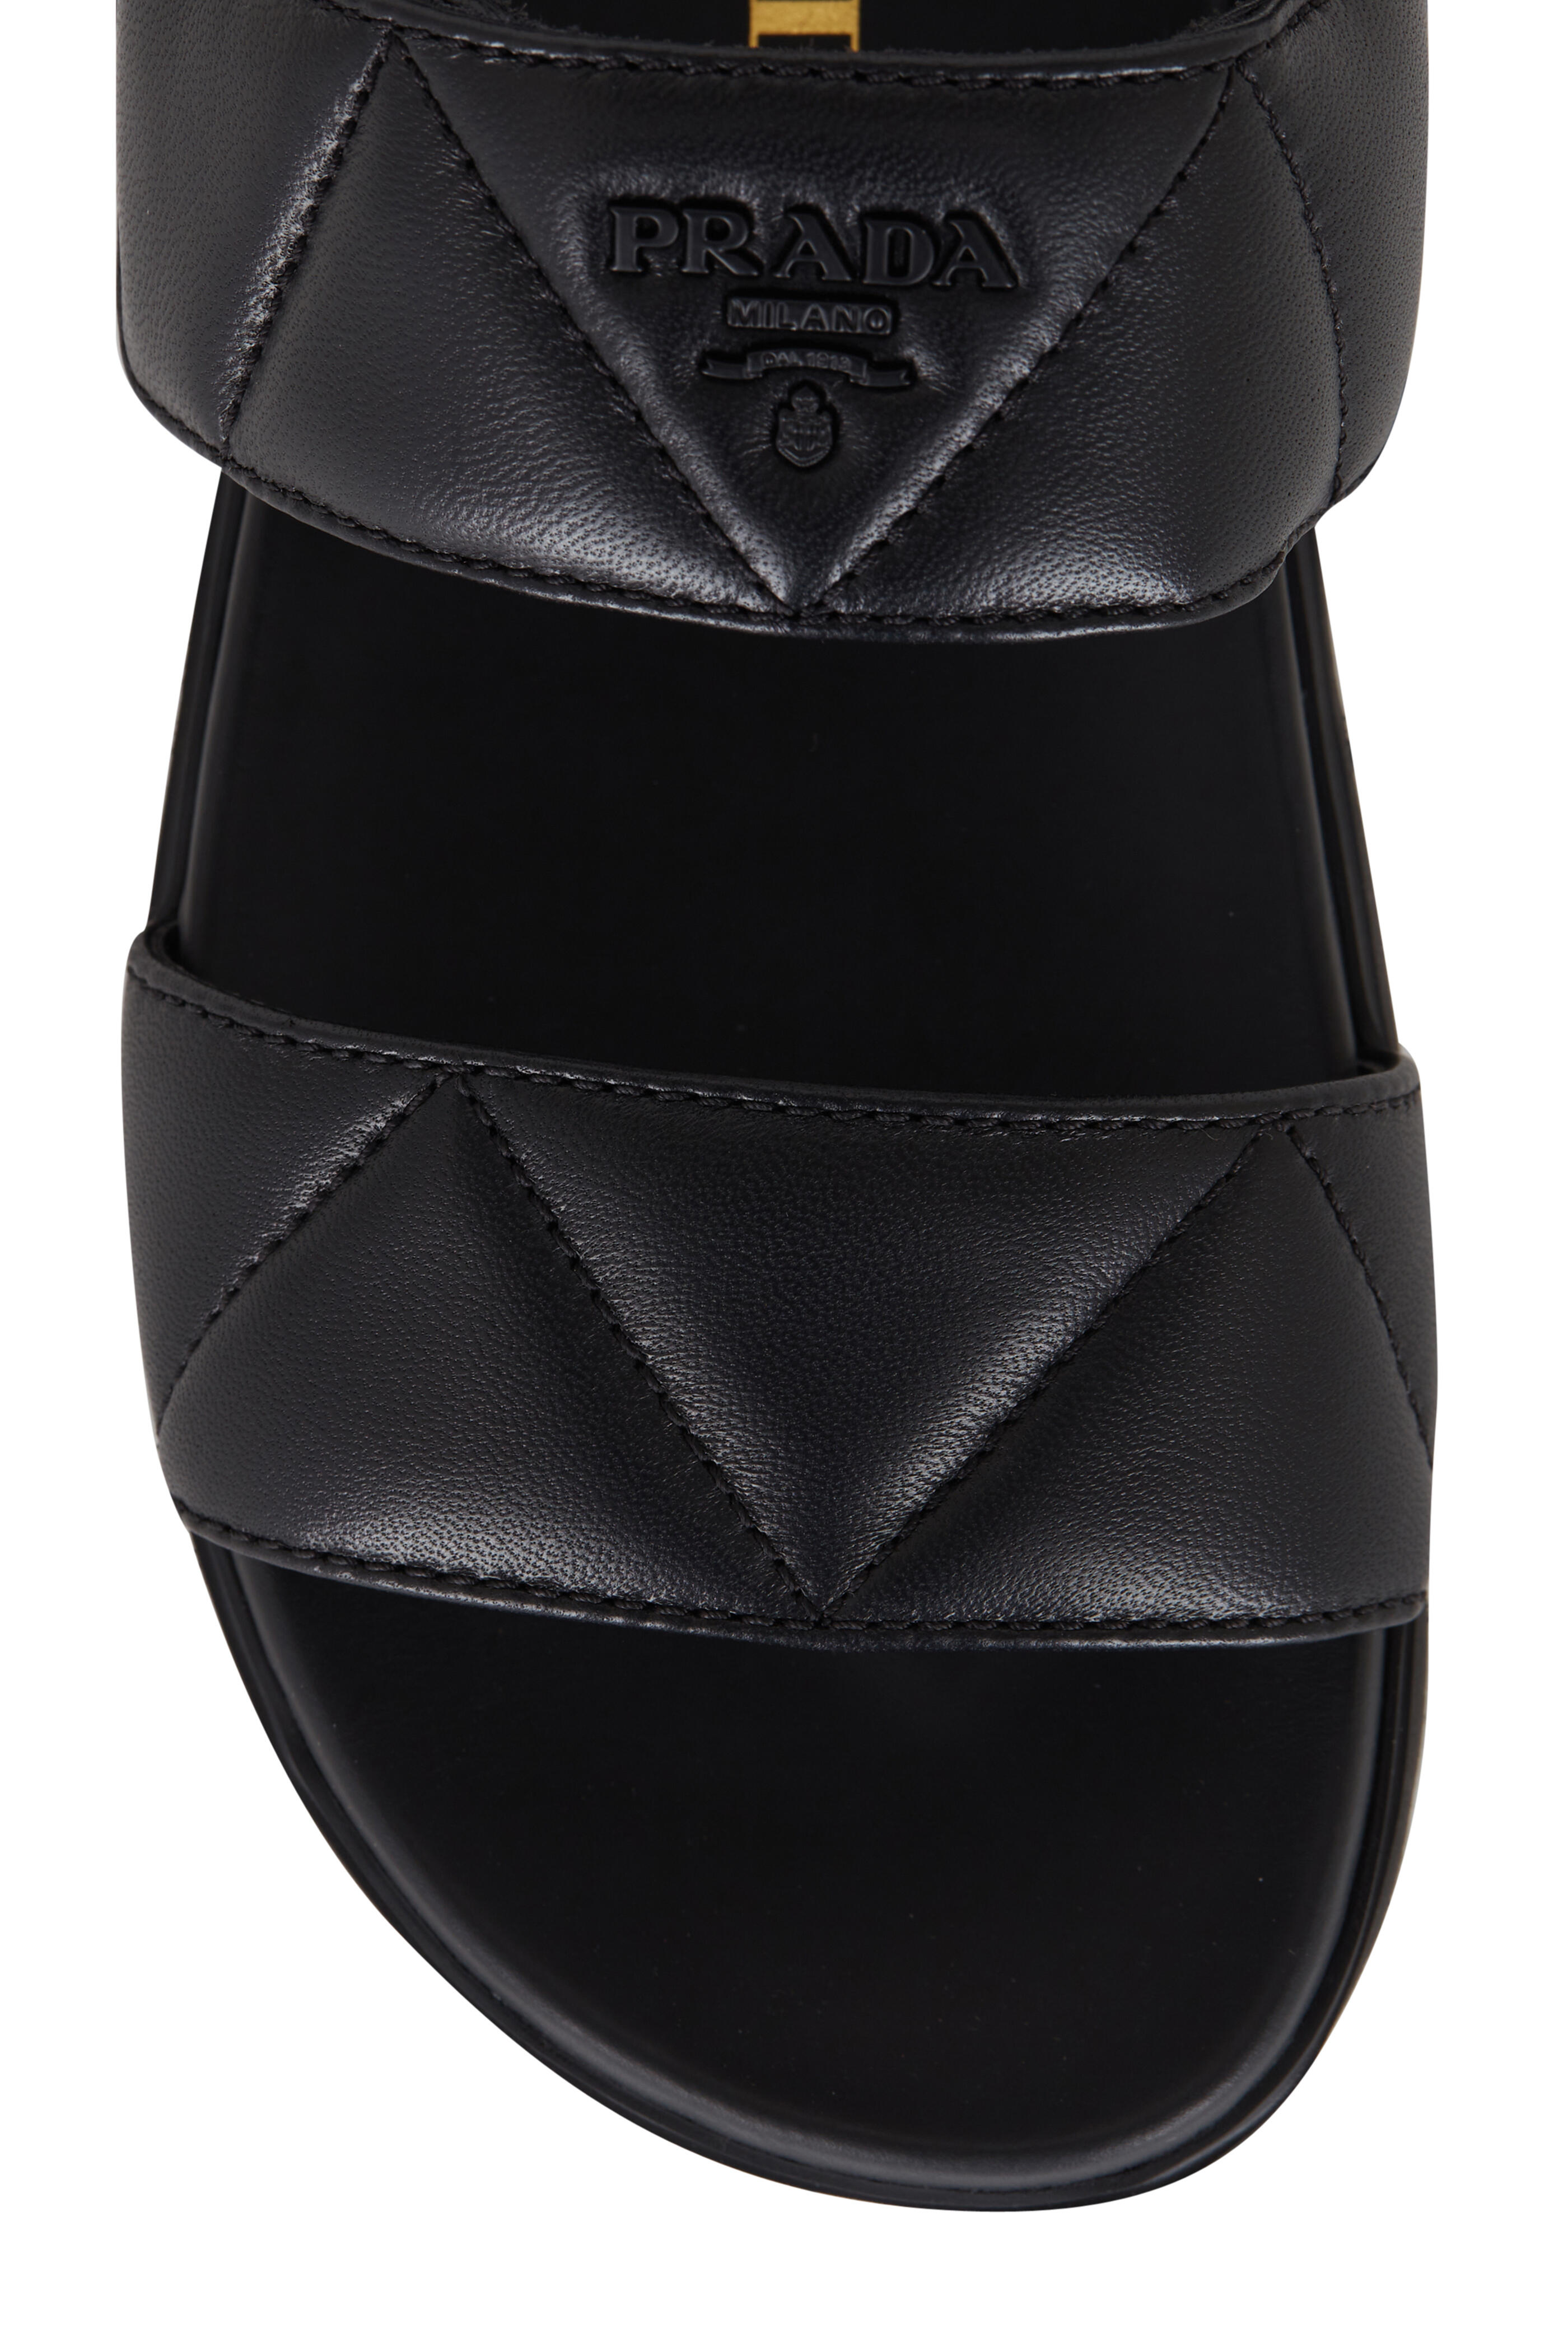 Intensiv mus eller rotte granske Prada - Black Quilted Leather Sport Sandal | Mitchell Stores